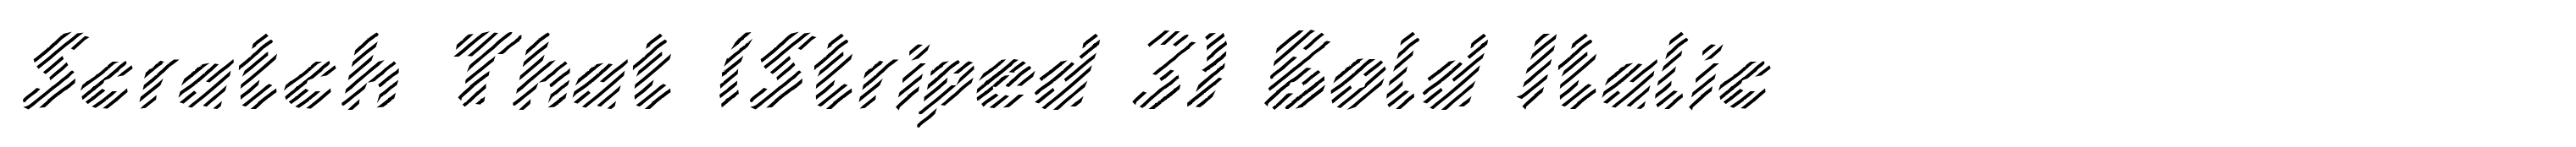 Scratch That (Striped 3) Bold Italic